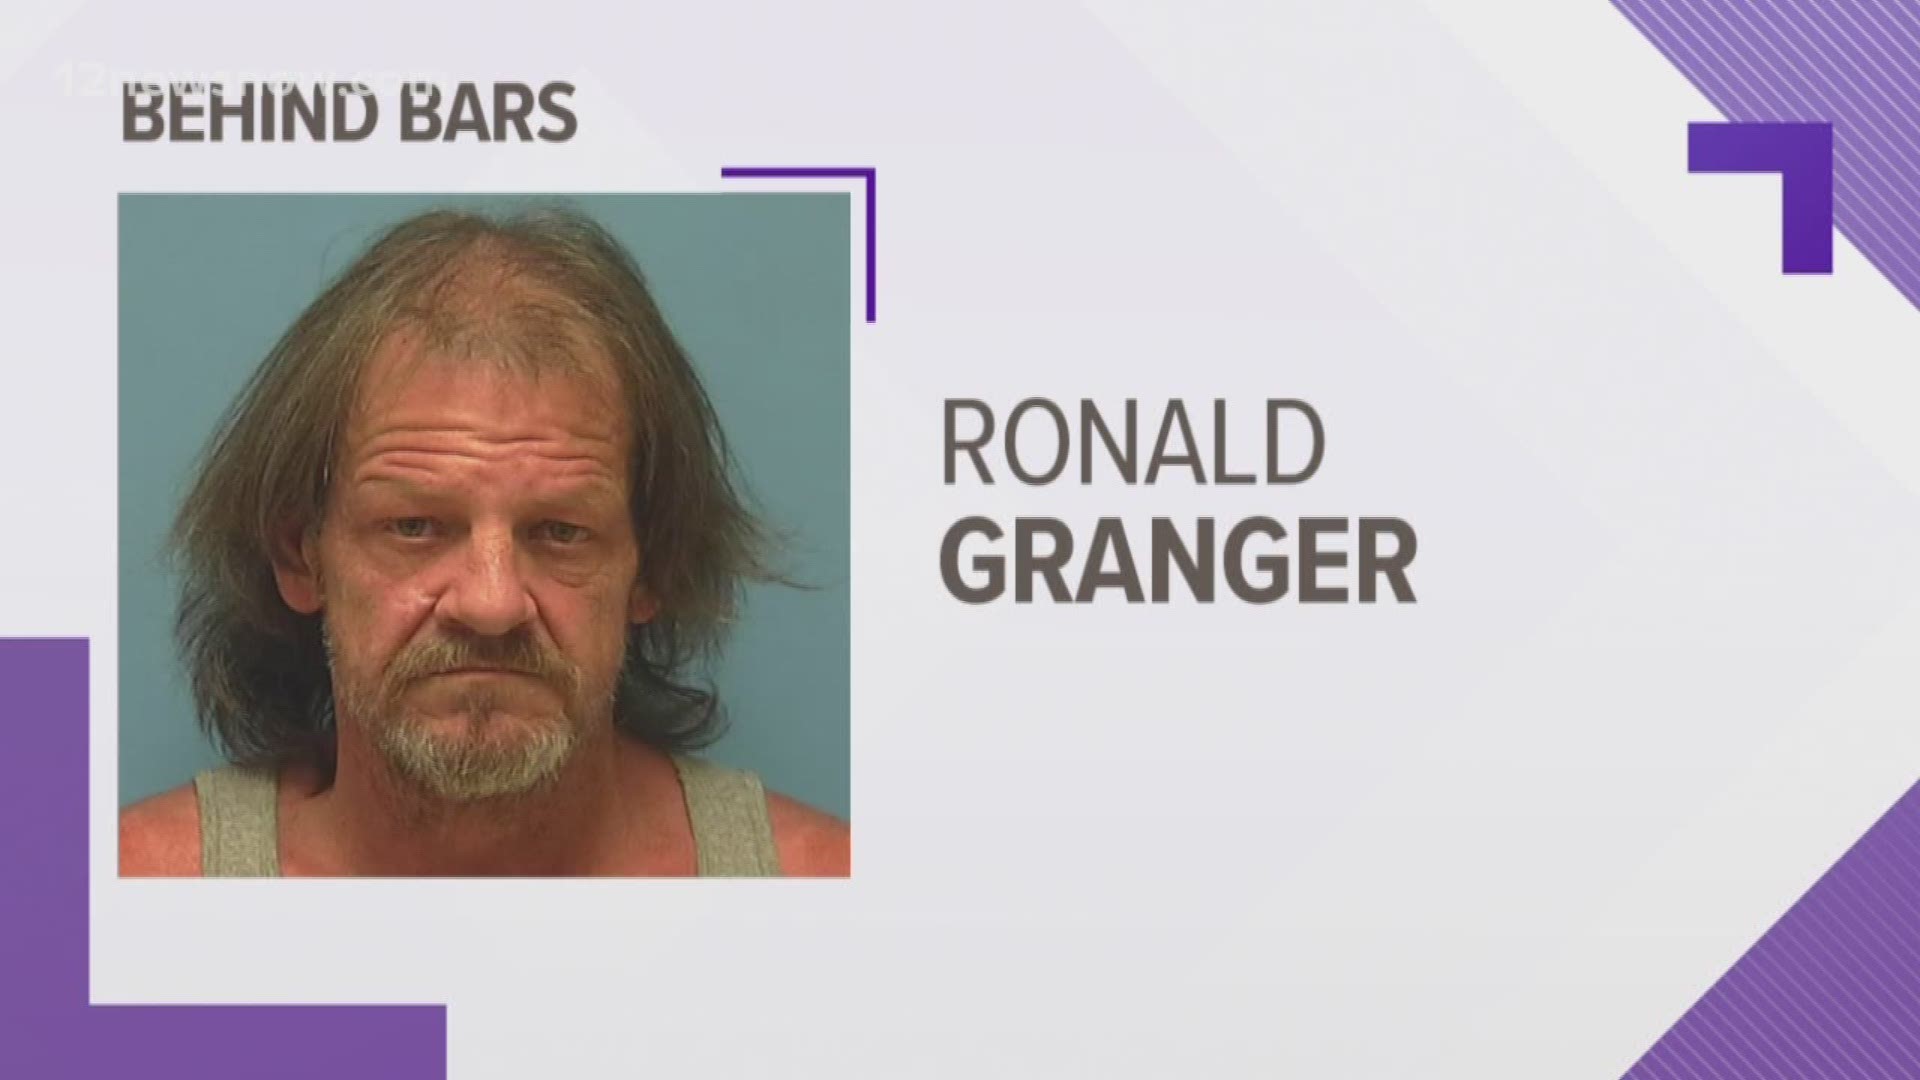 Ronald Granger is held on bonds totaling $225,000 bond.